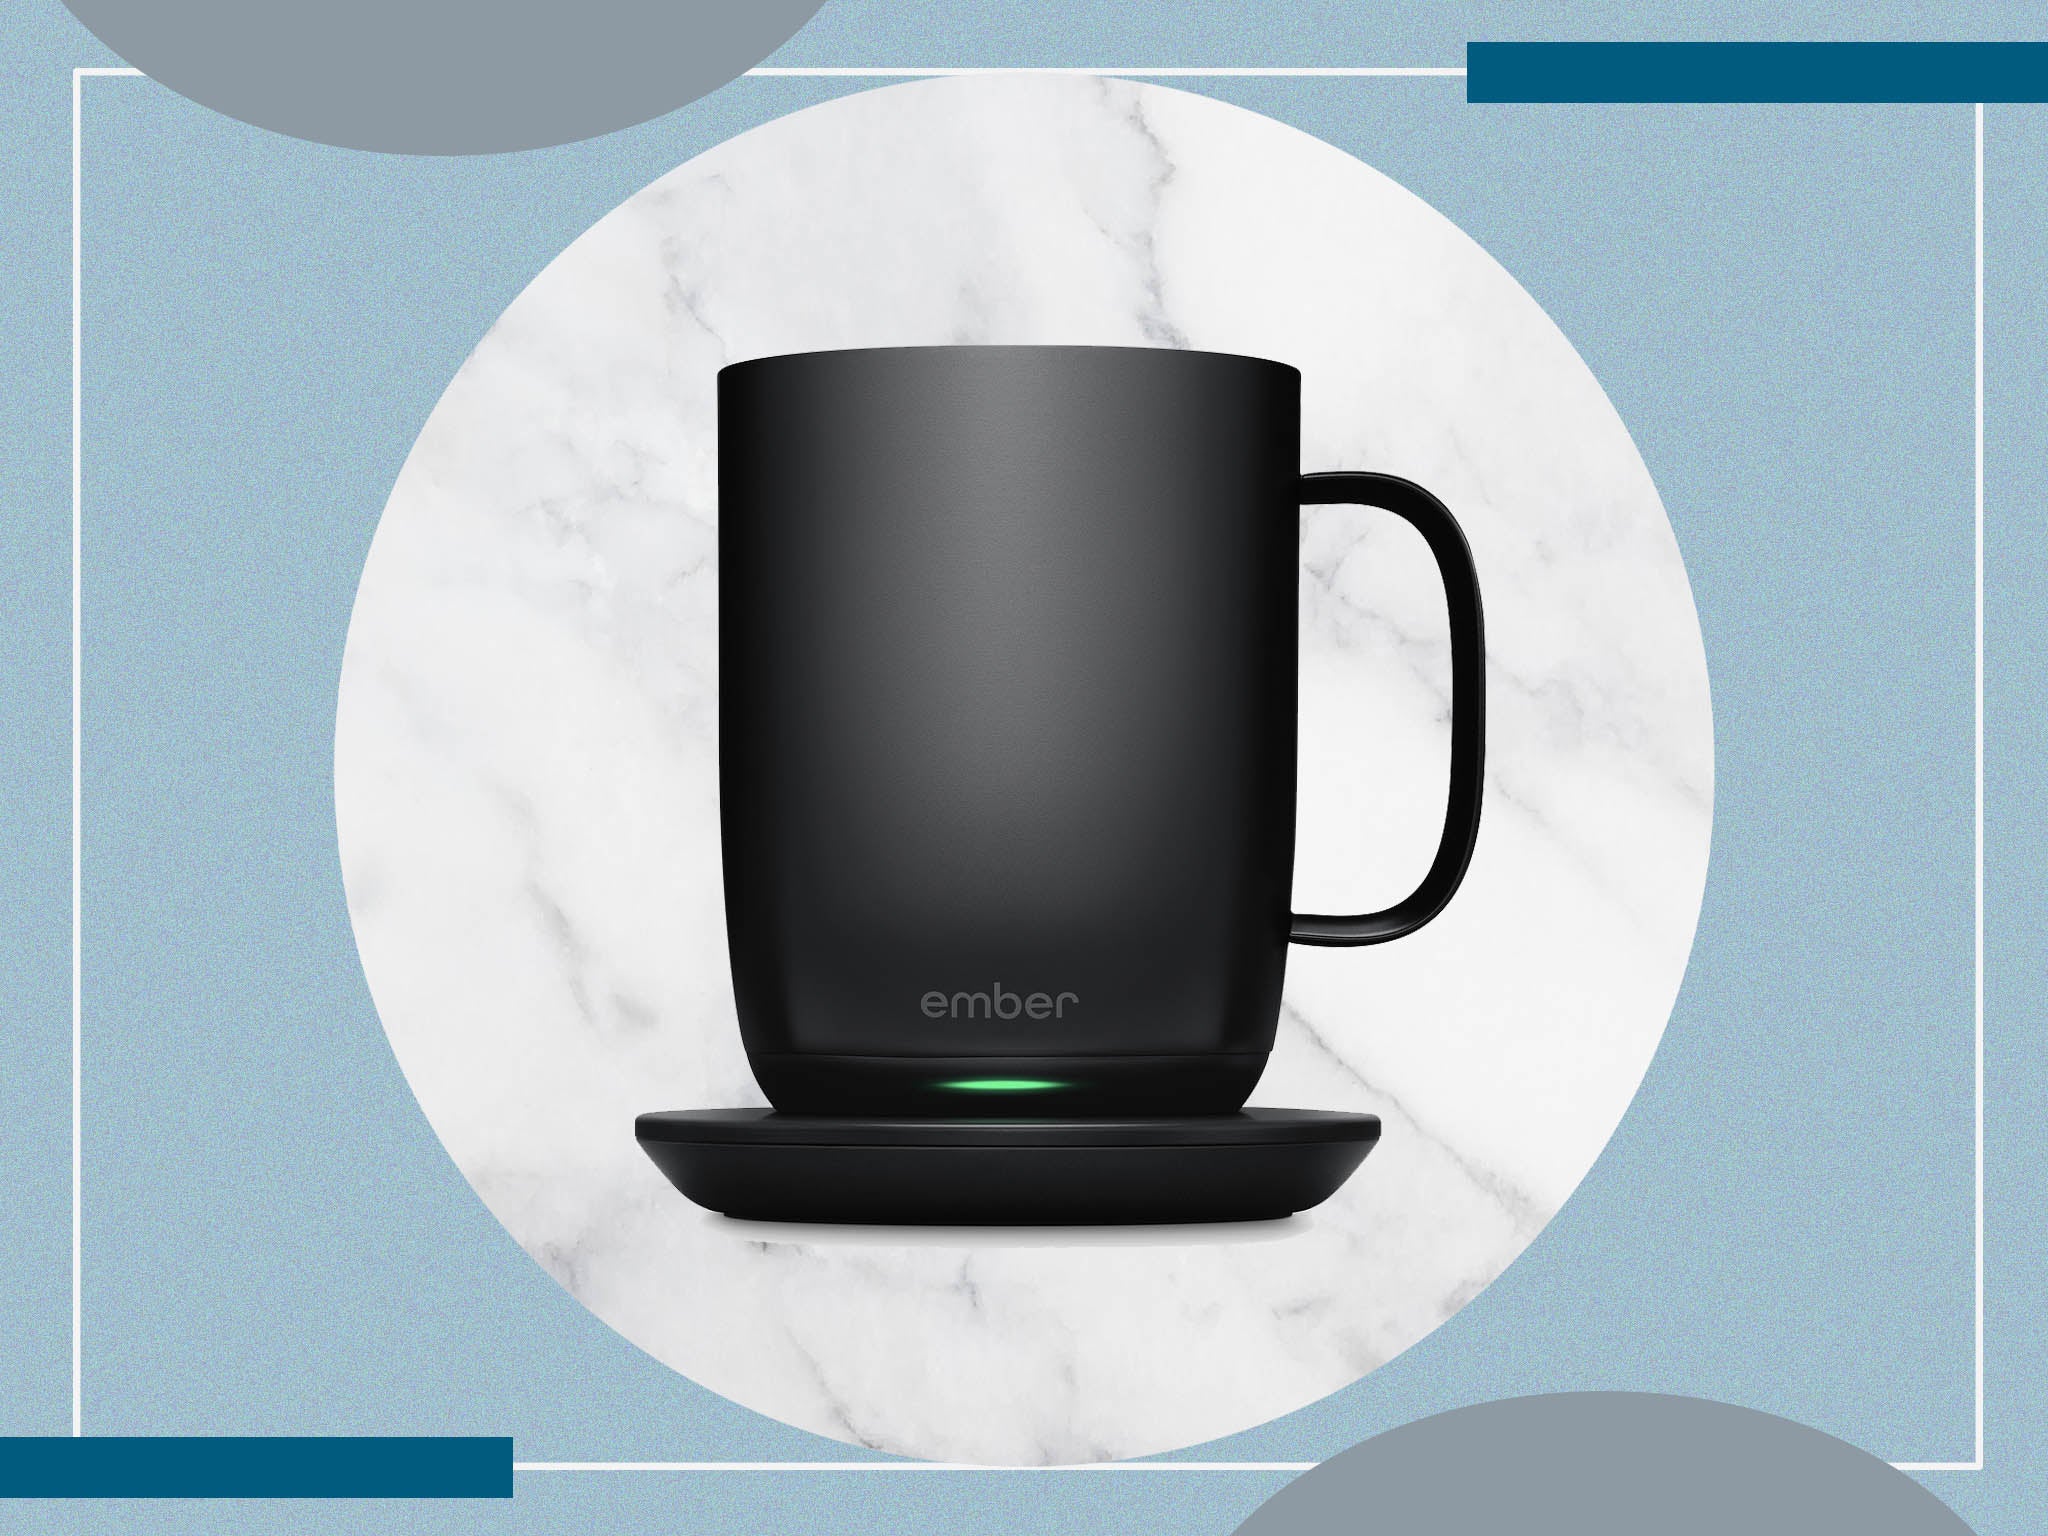 Ember Mug 2 review: The smart mug we never knew we needed